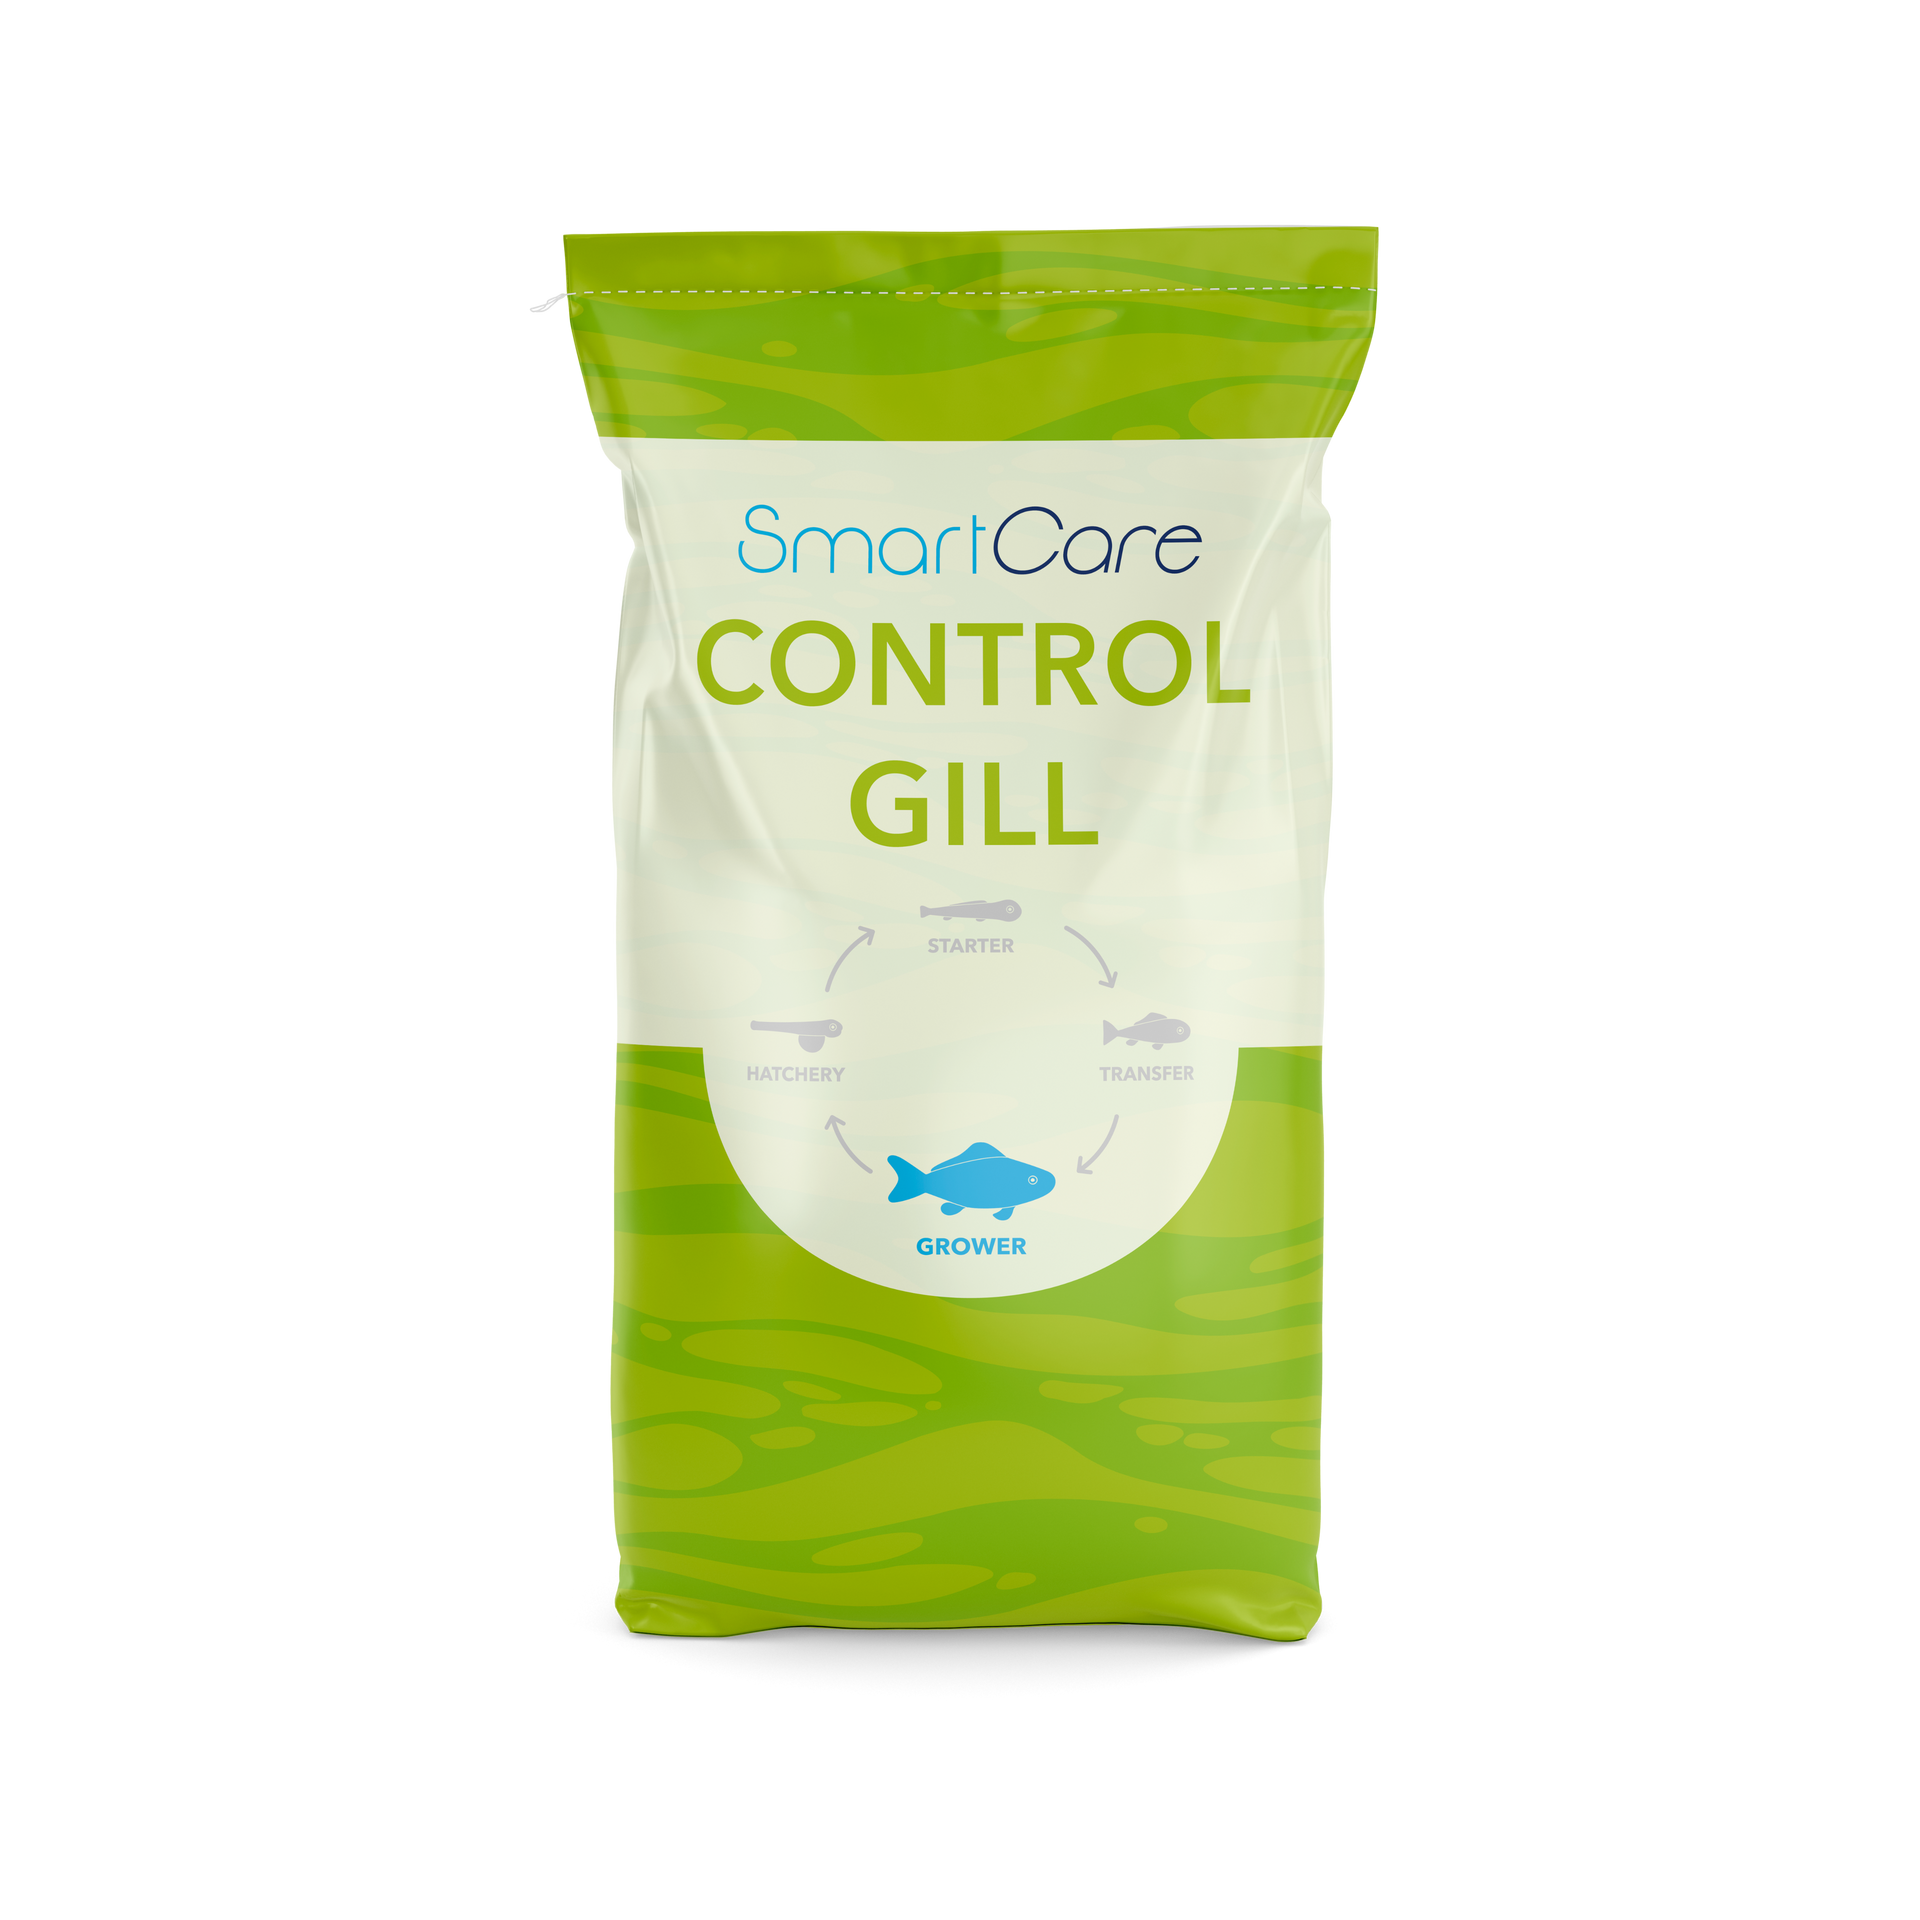 SmartCare Control Gill health feed for salmon